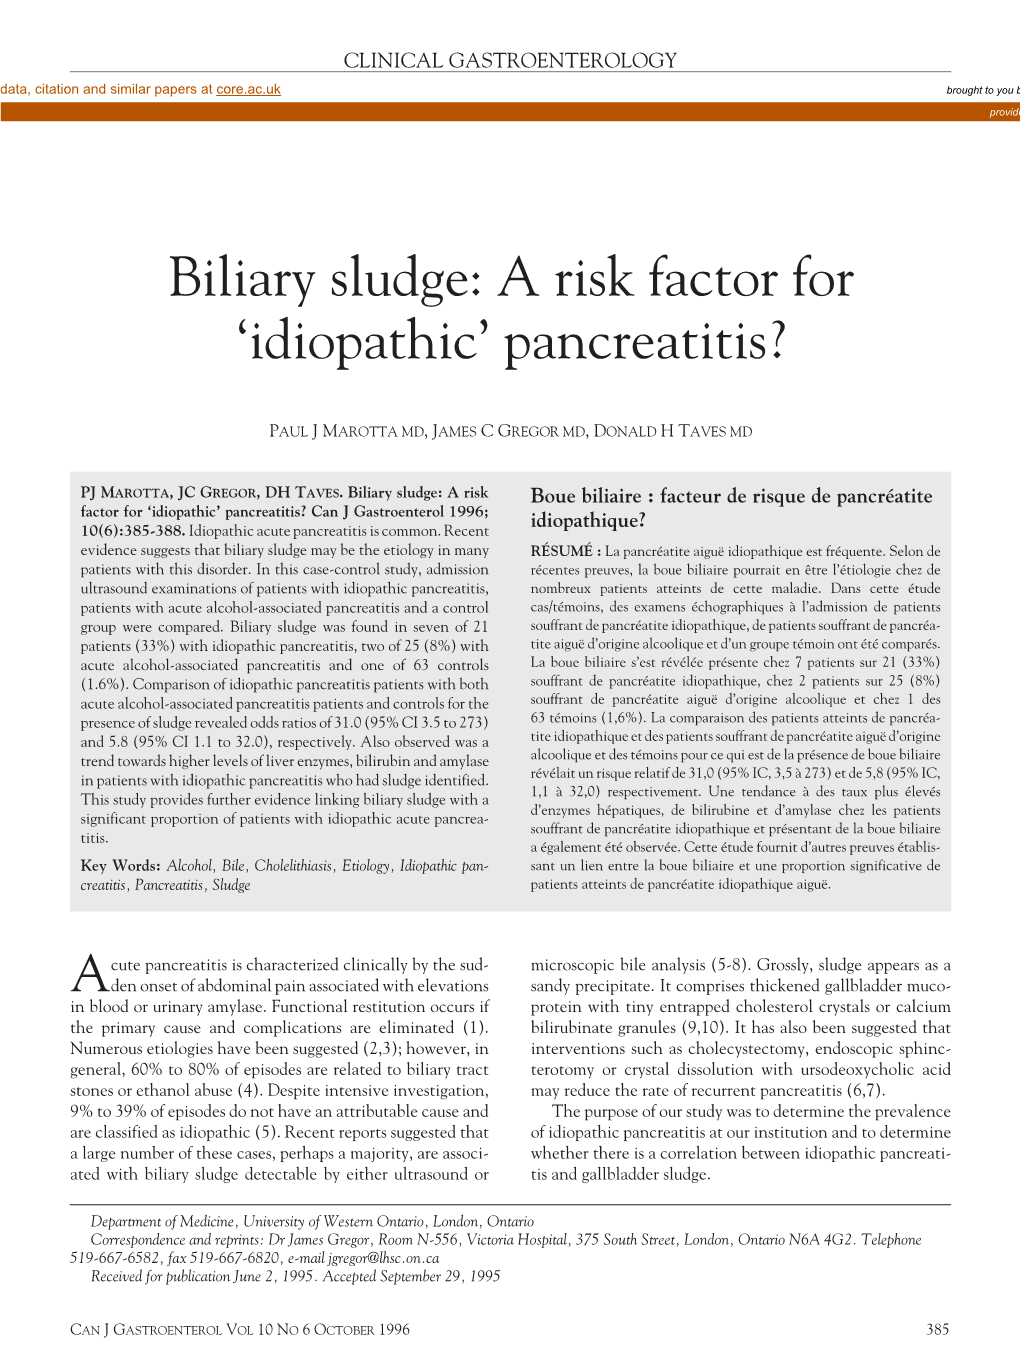 Biliary Sludge: a Risk Factor for ‘Idiopathic’ Pancreatitis?